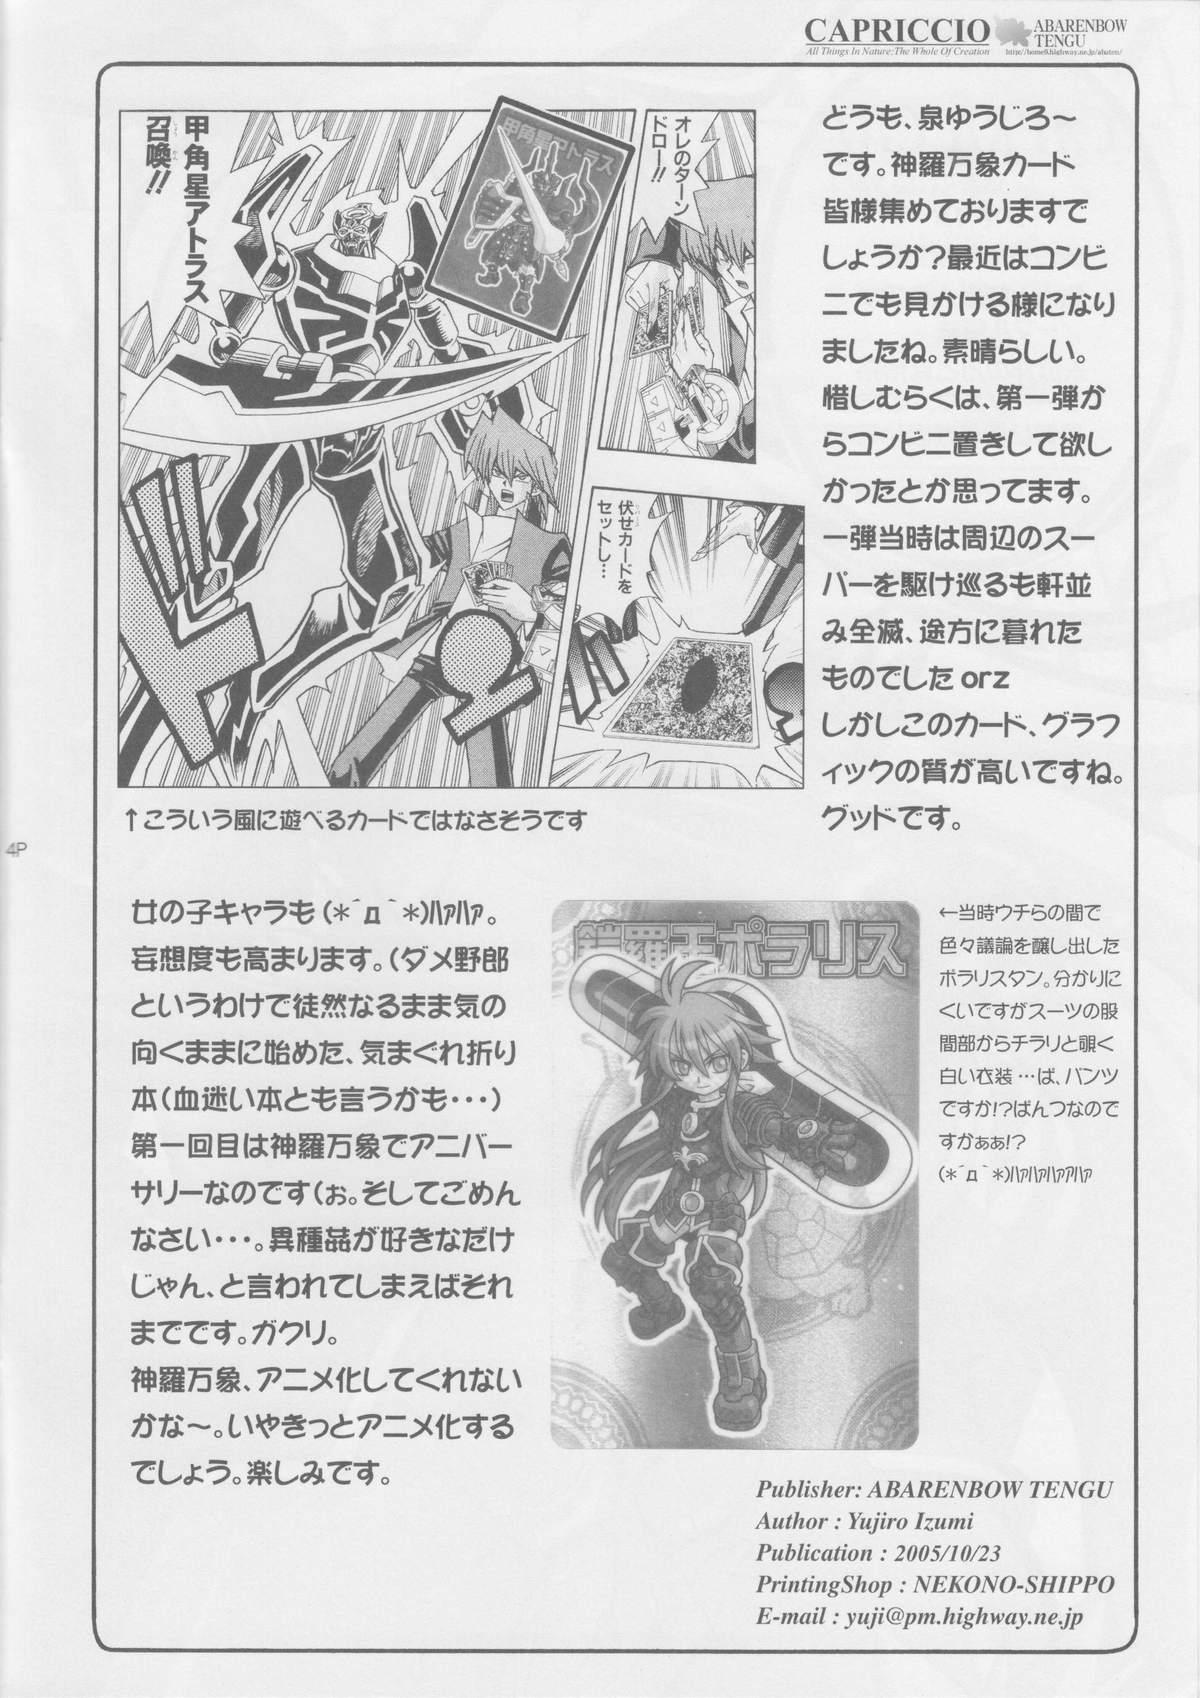 Hardcore Rough Sex CAPRICCIO Kimagure shi vol.1 - Shinrabansho Ecchi - Page 4